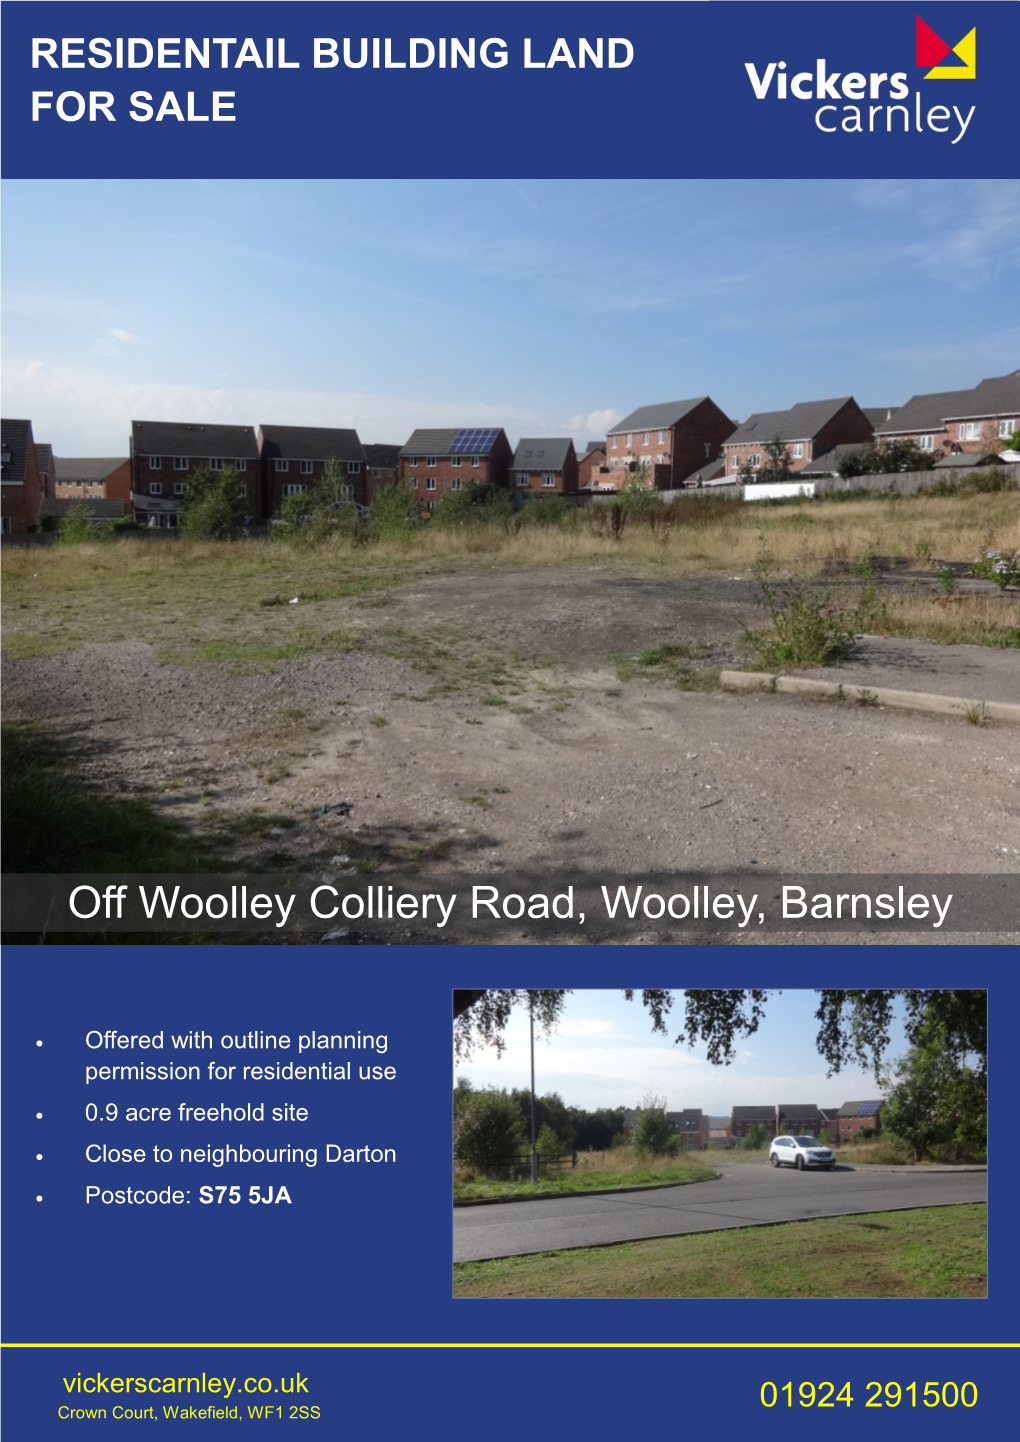 Off Woolley Colliery Road, Woolley, Barnsley